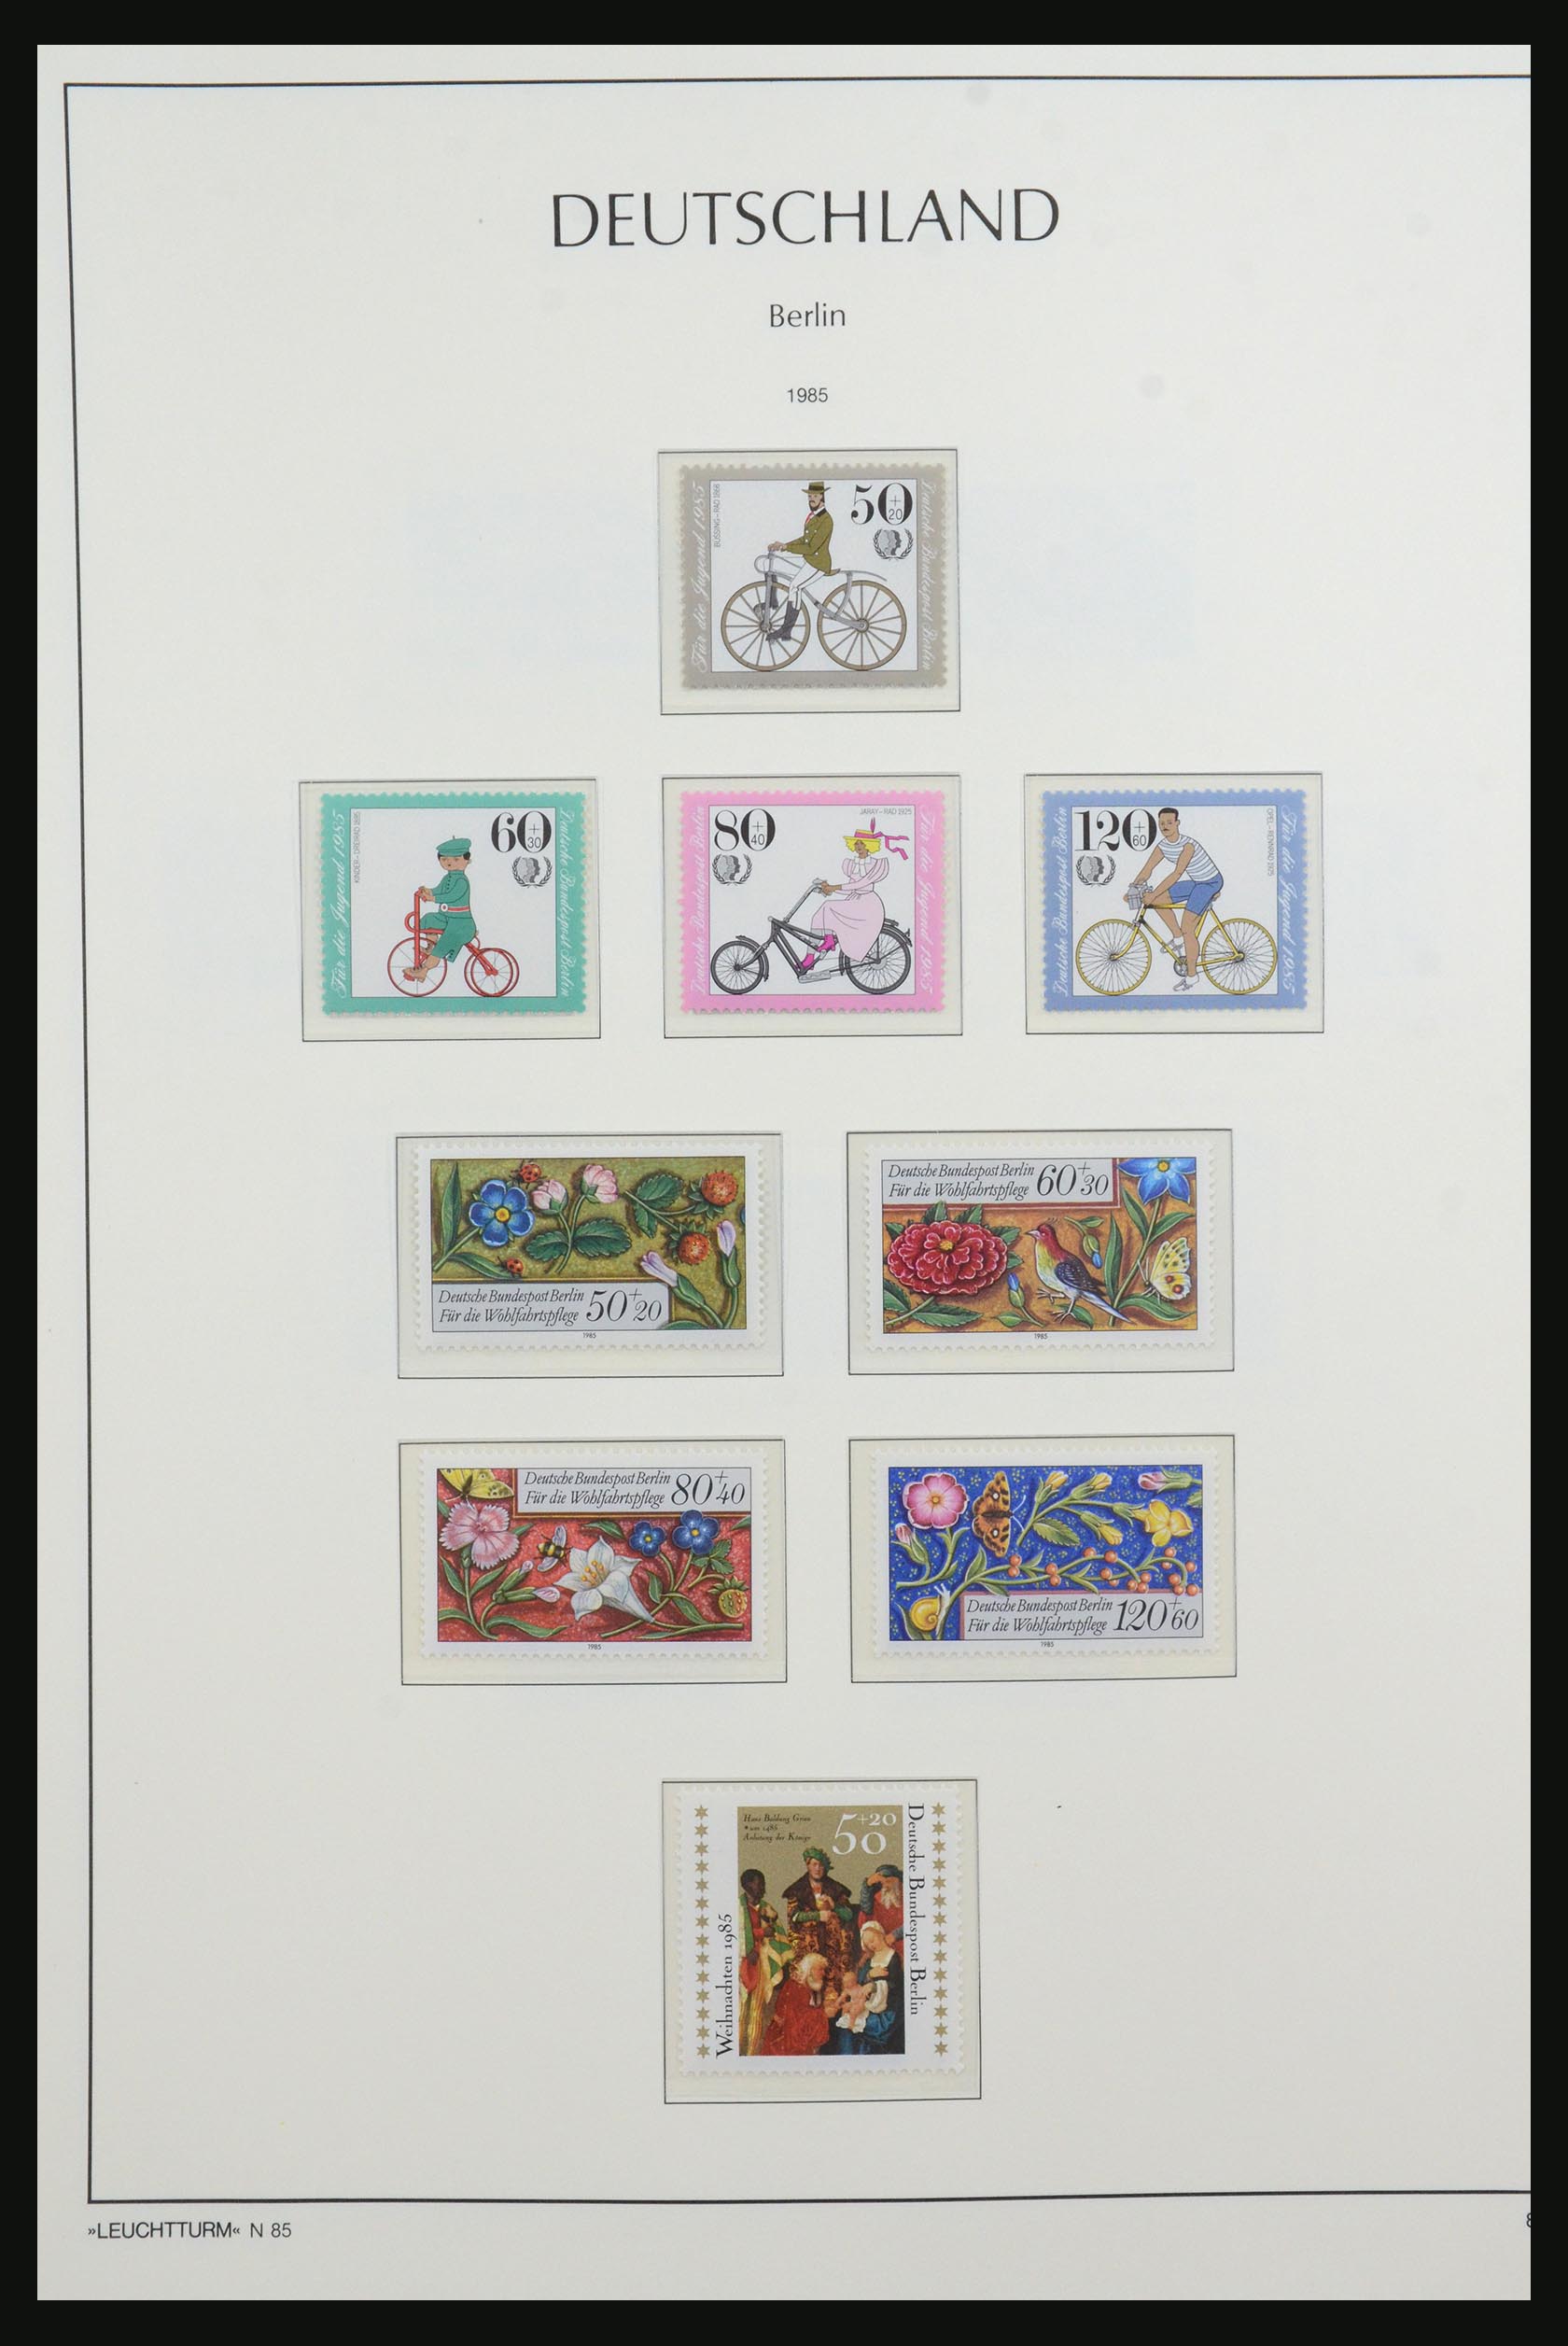 31601 073 - 31601 Bundespost, Berlin and Saar 1948-2008.